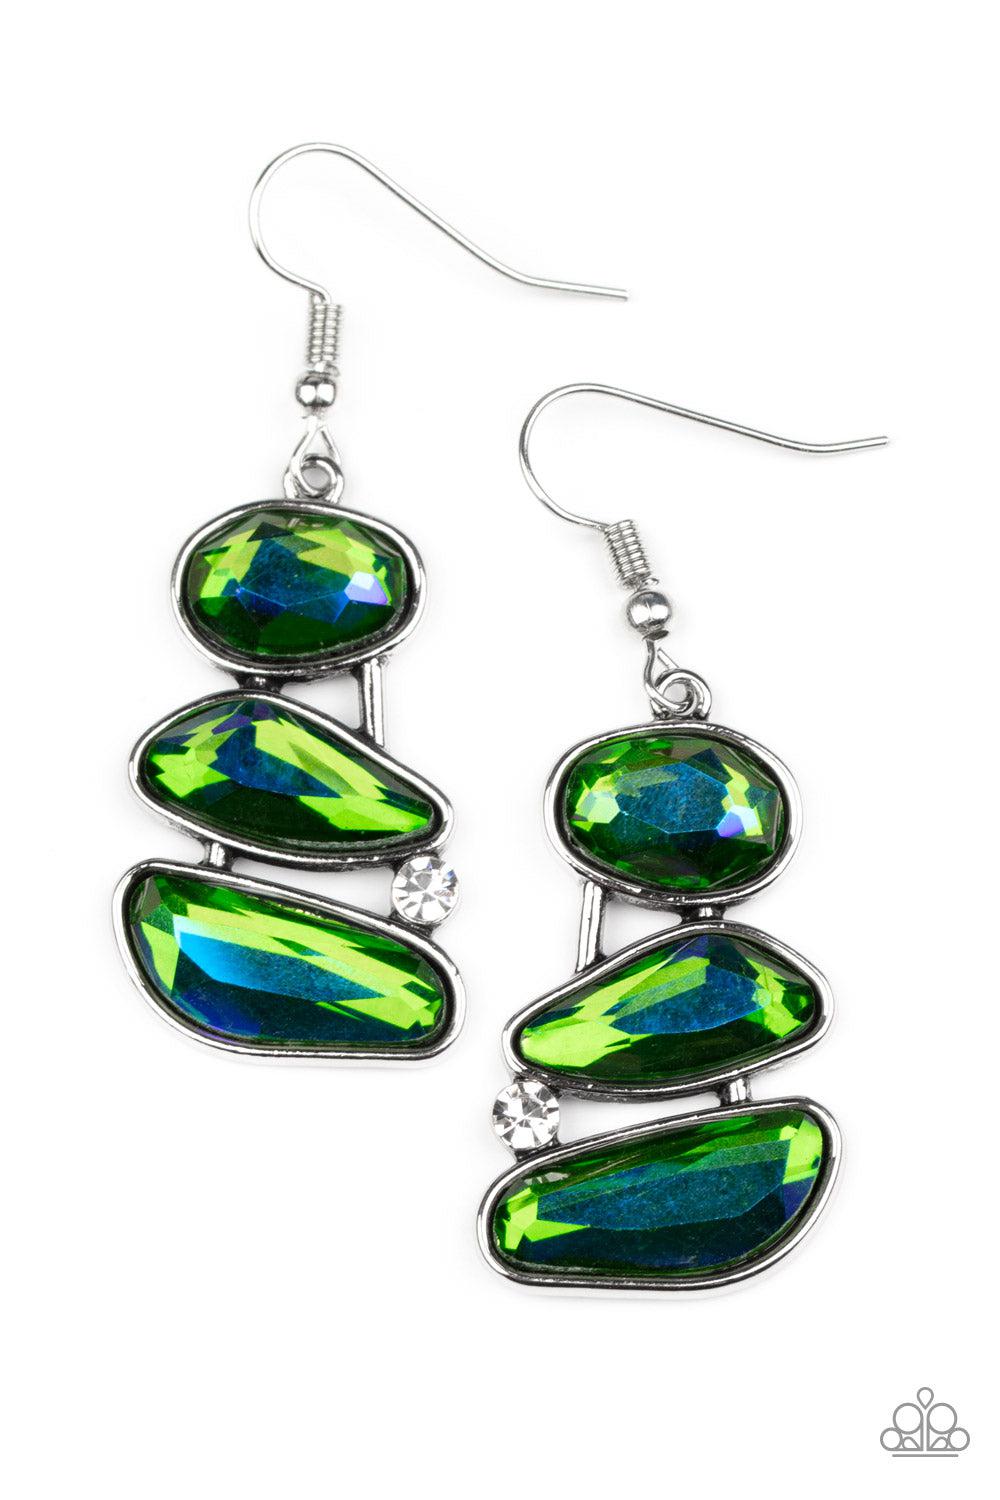 Gem Galaxy Green Earrings - Paparazzi Accessories- lightbox - CarasShop.com - $5 Jewelry by Cara Jewels